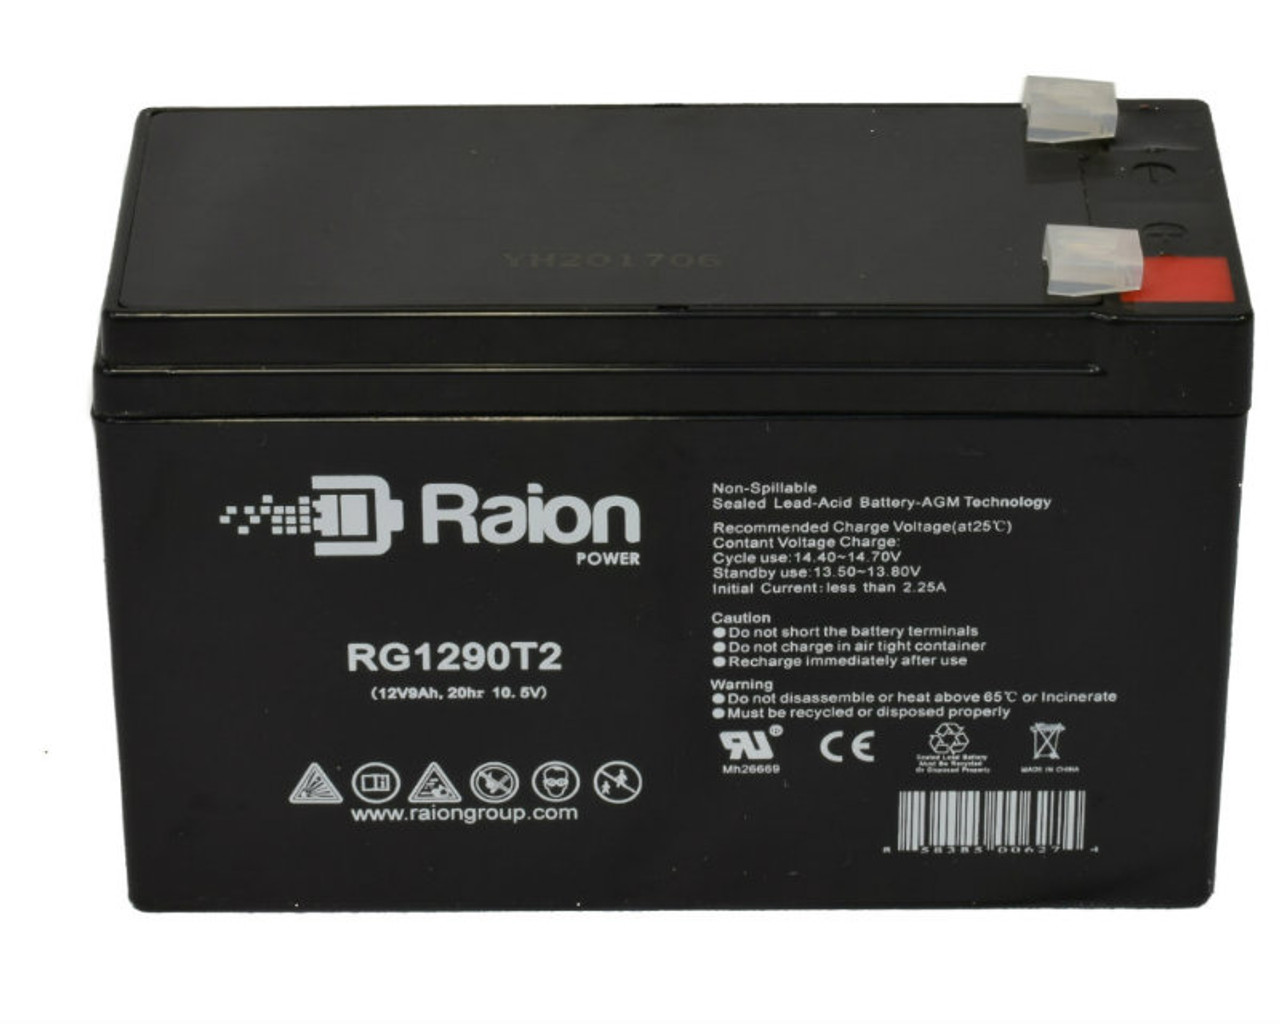 Raion Power RG1290T2 12V 9Ah Lead Acid Battery for Saft Blood FLOW Monitor